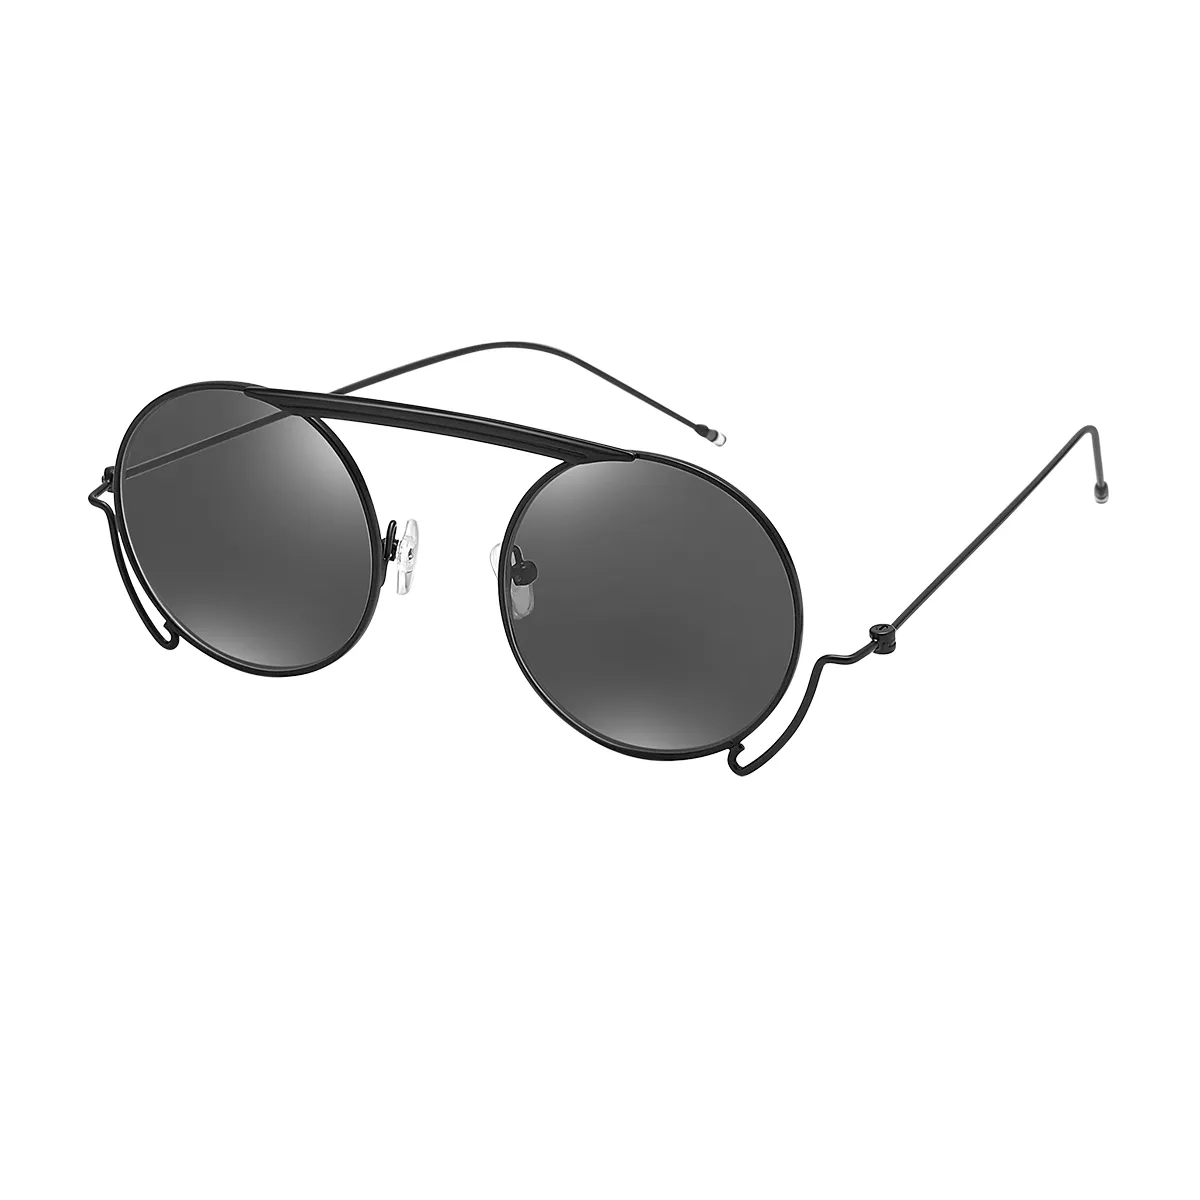 Cooper - Round Black Sunglasses for Women